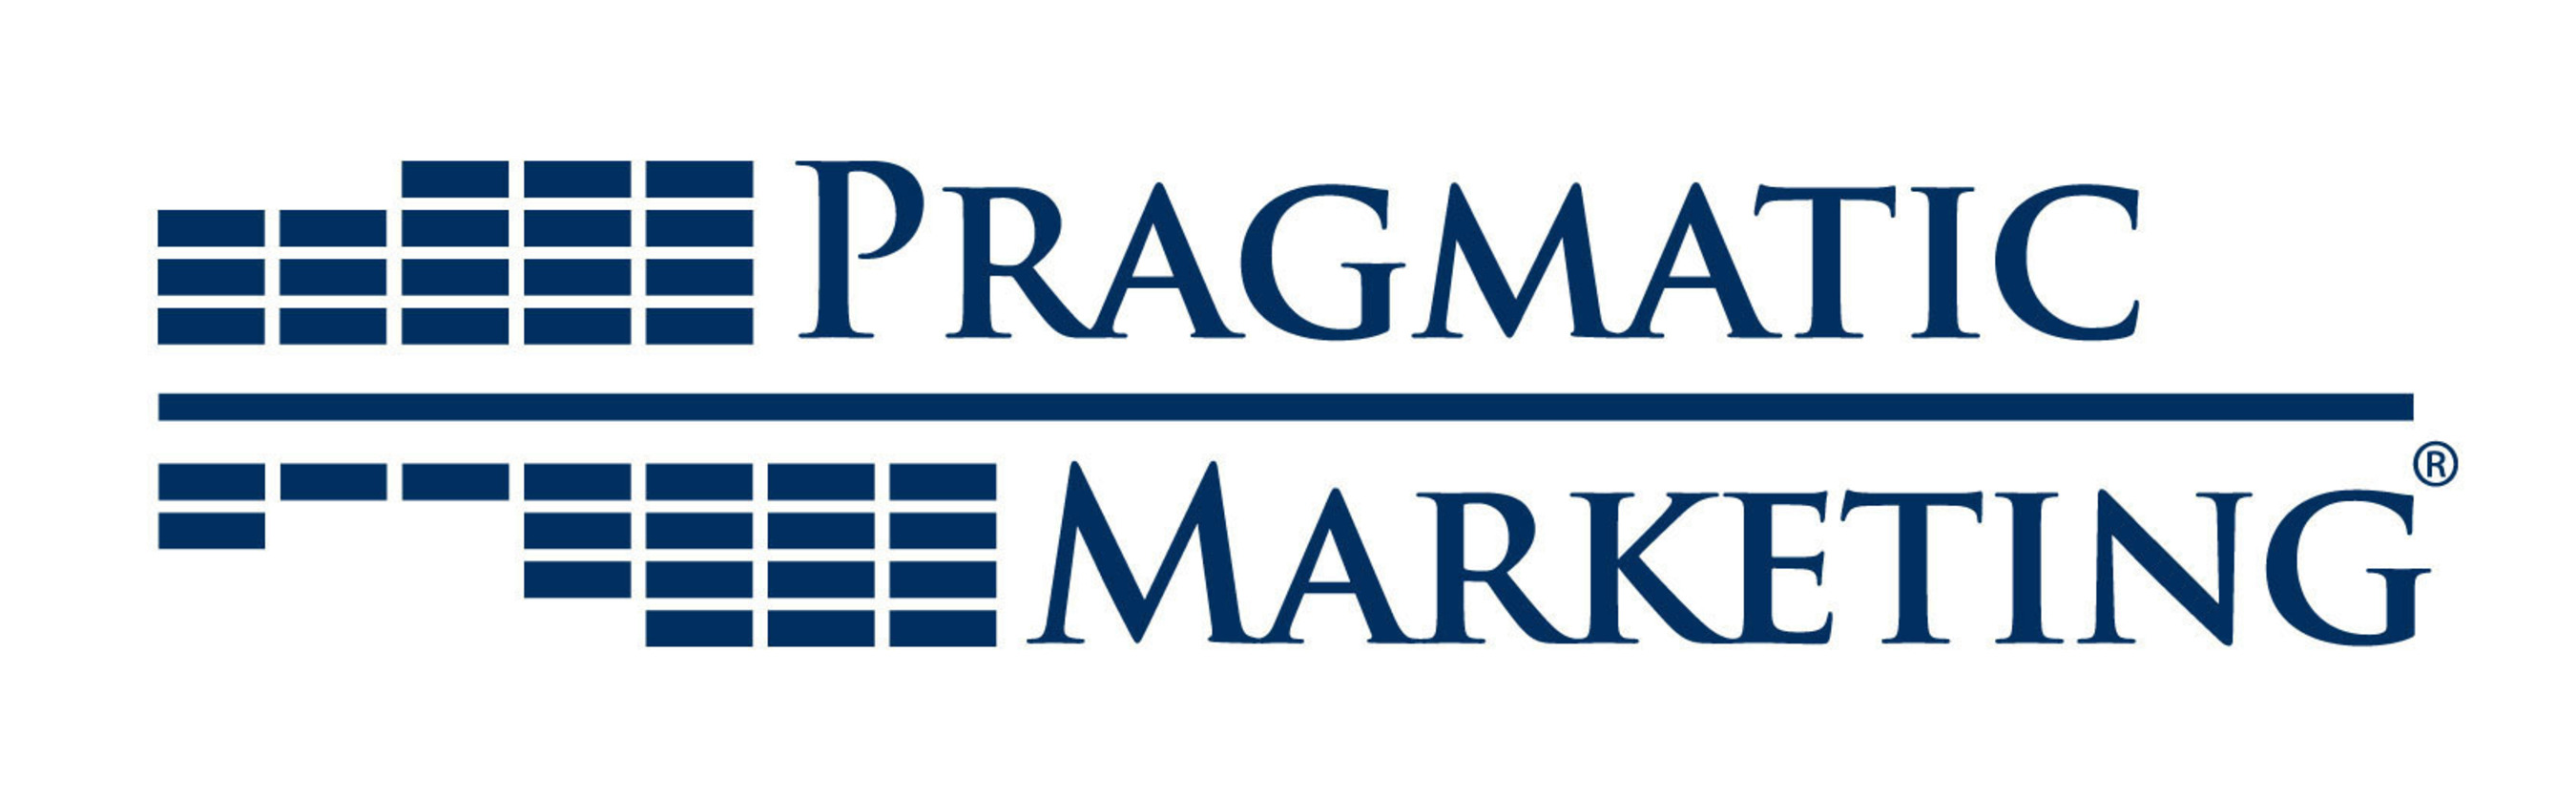 Pragmatic Marketing Logo.